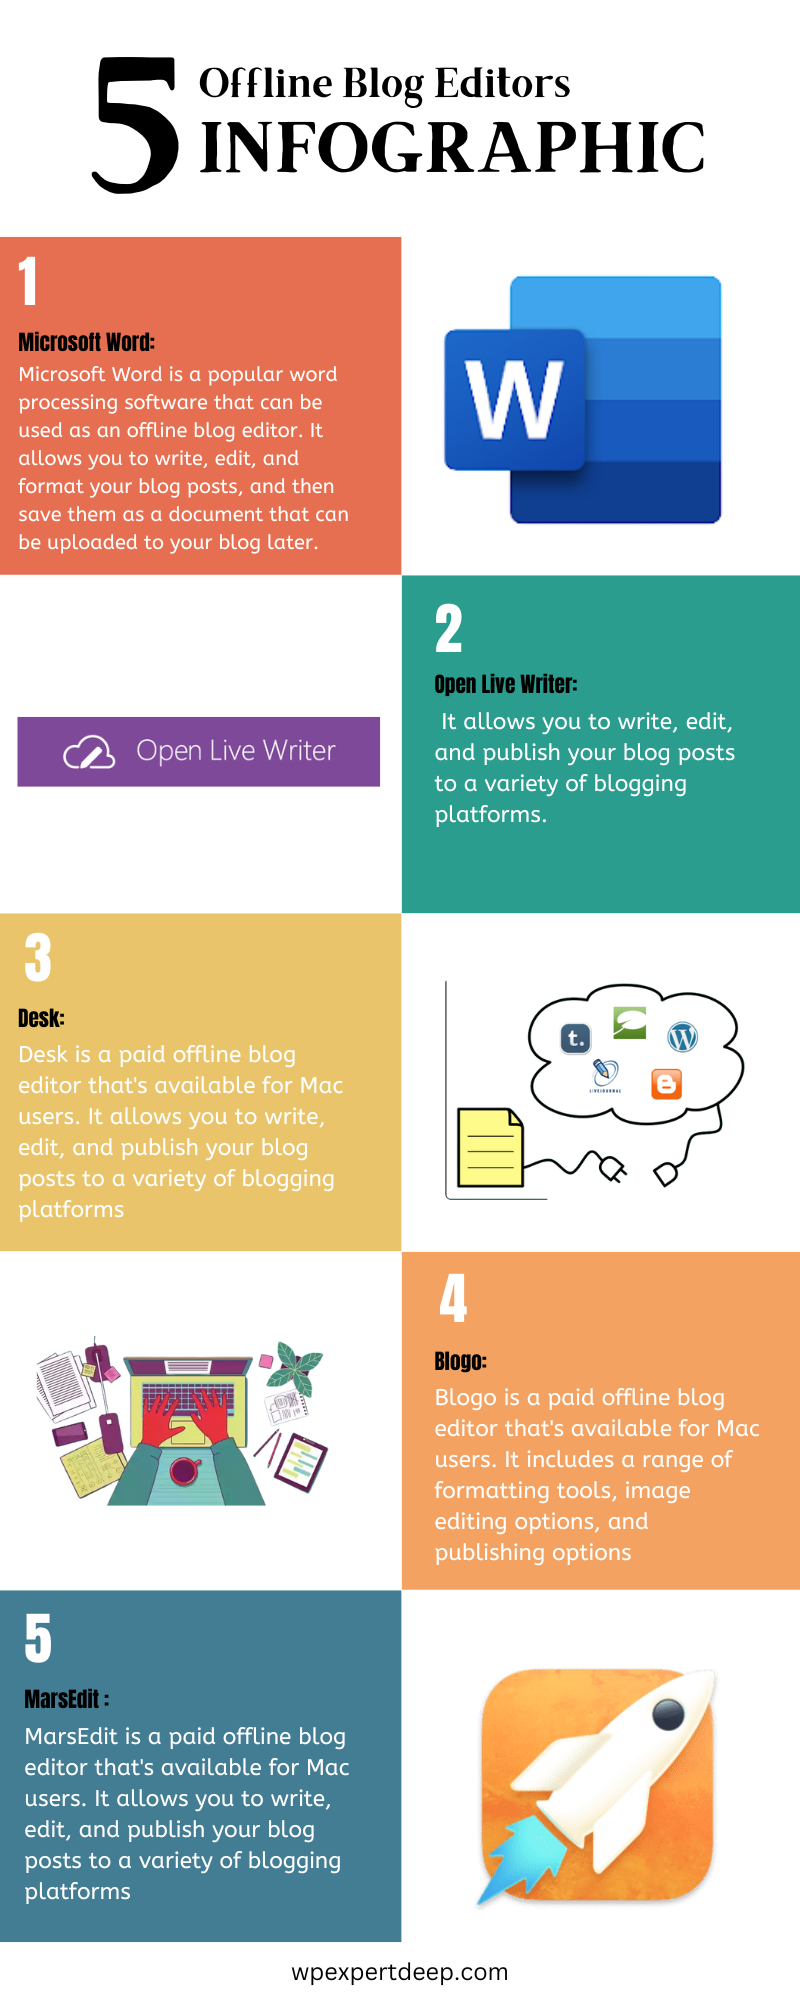 5 Offline Blog Editors